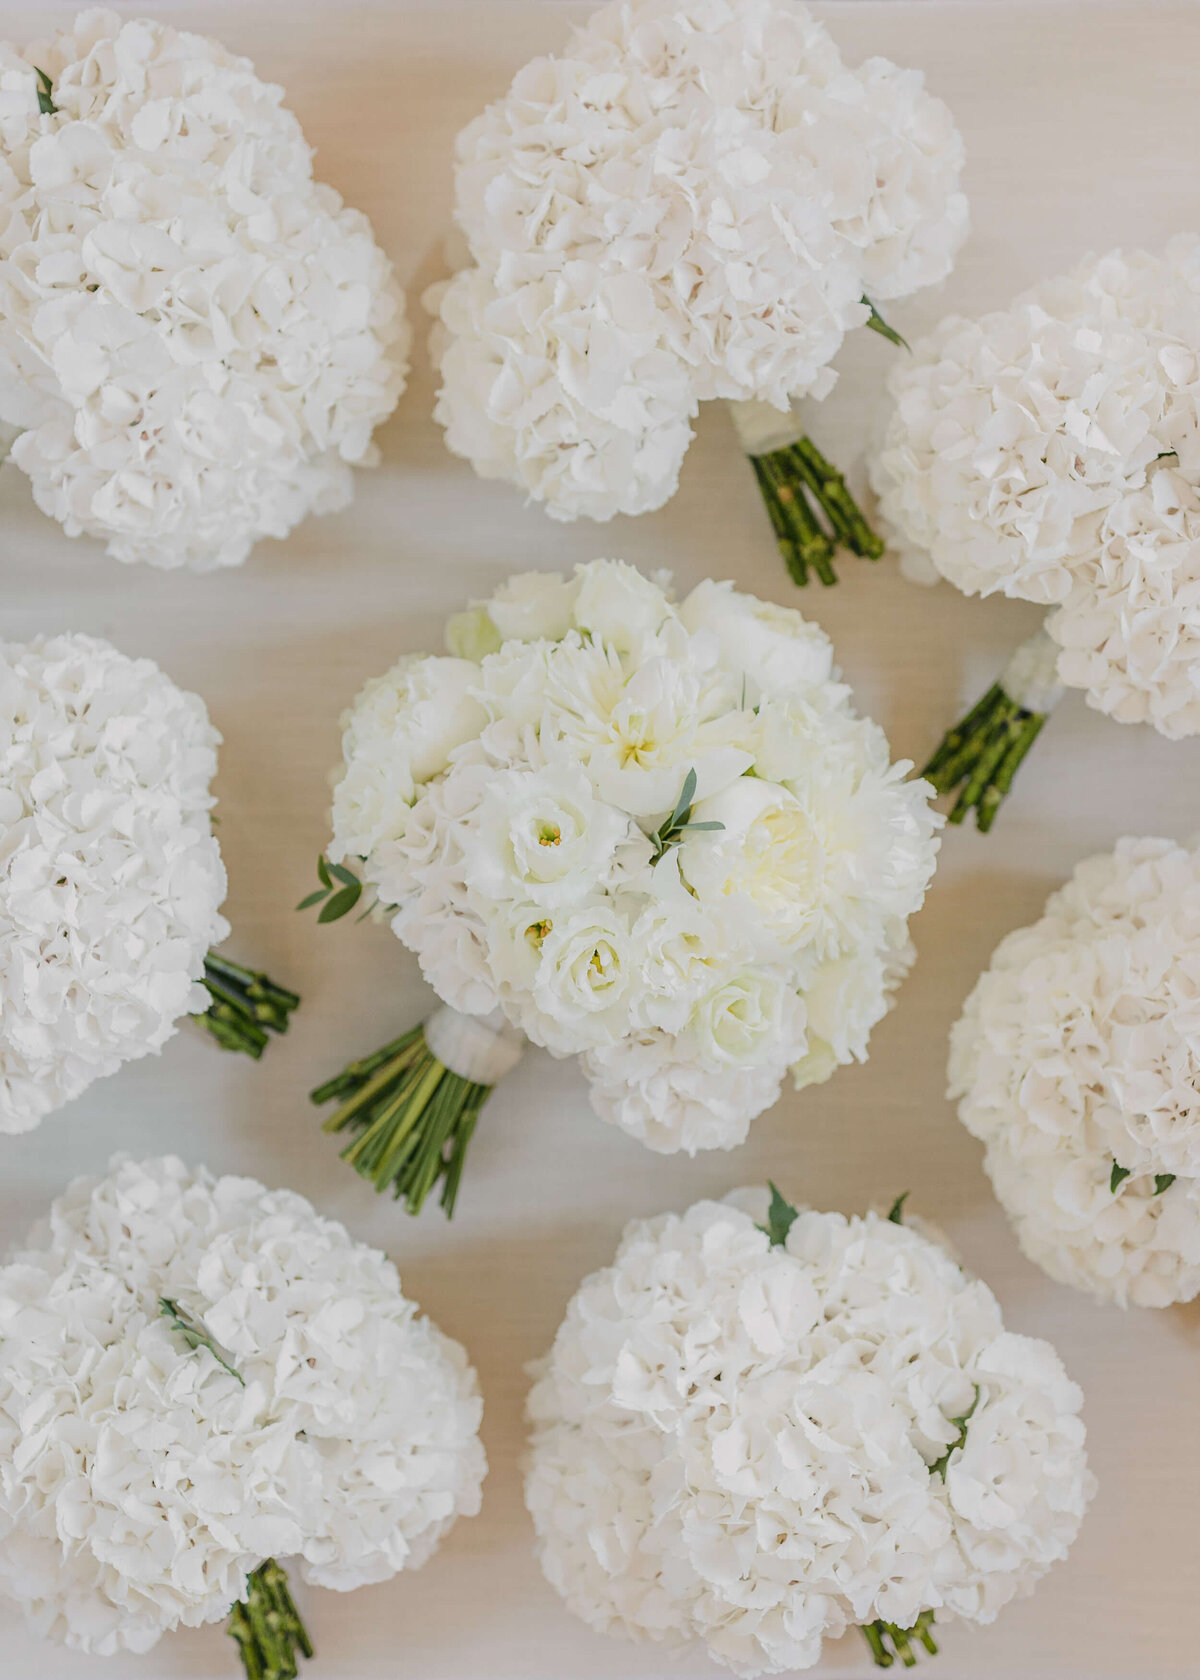 chloe-winstanley-weddings-bridal-boquet-hydrangea-cream-white